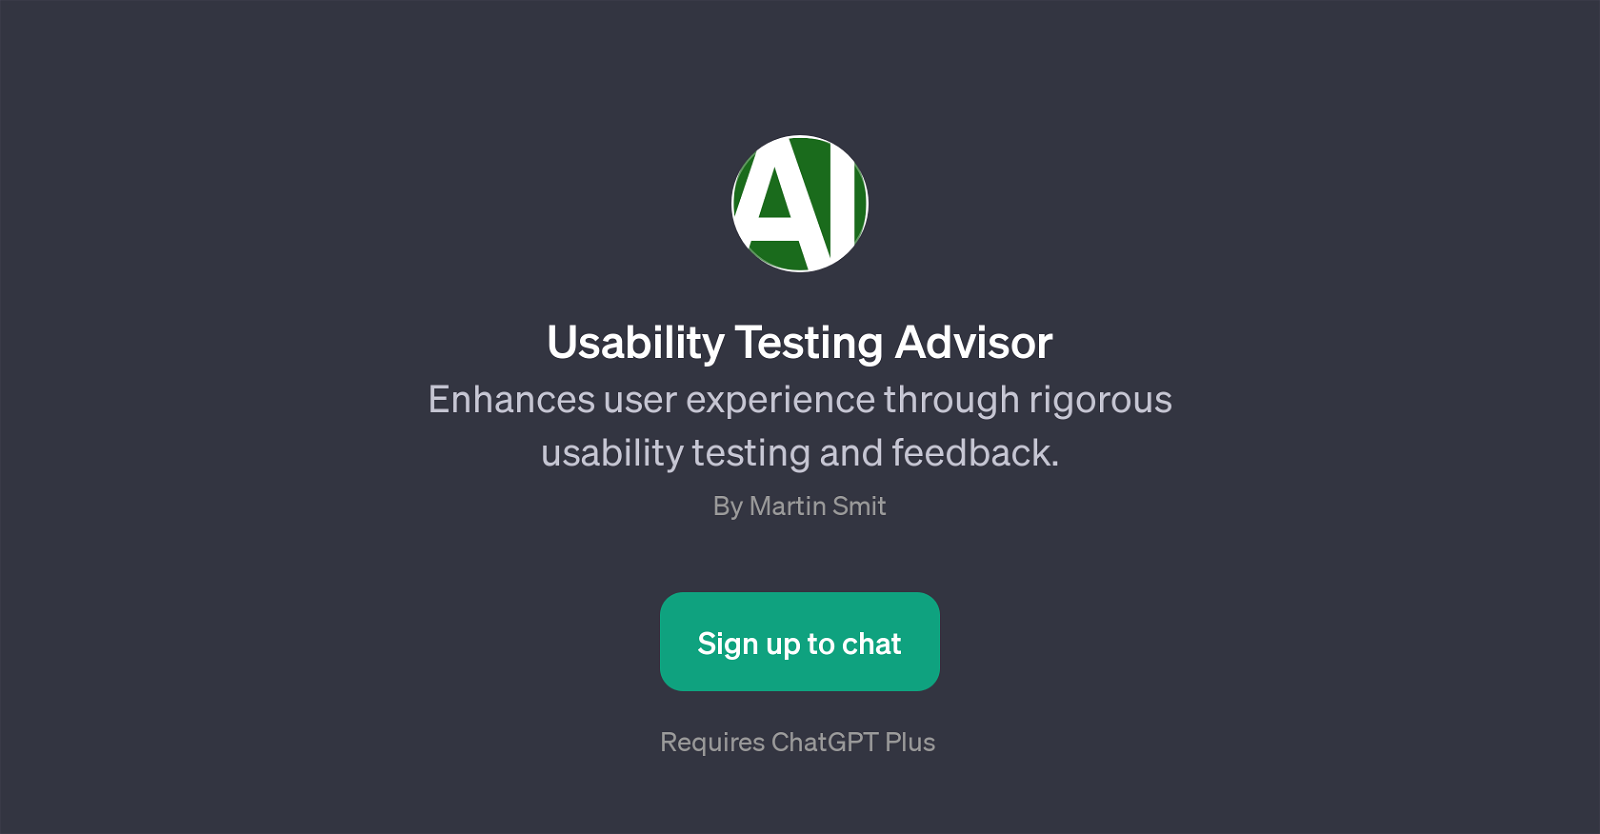 Usability Testing Advisor website